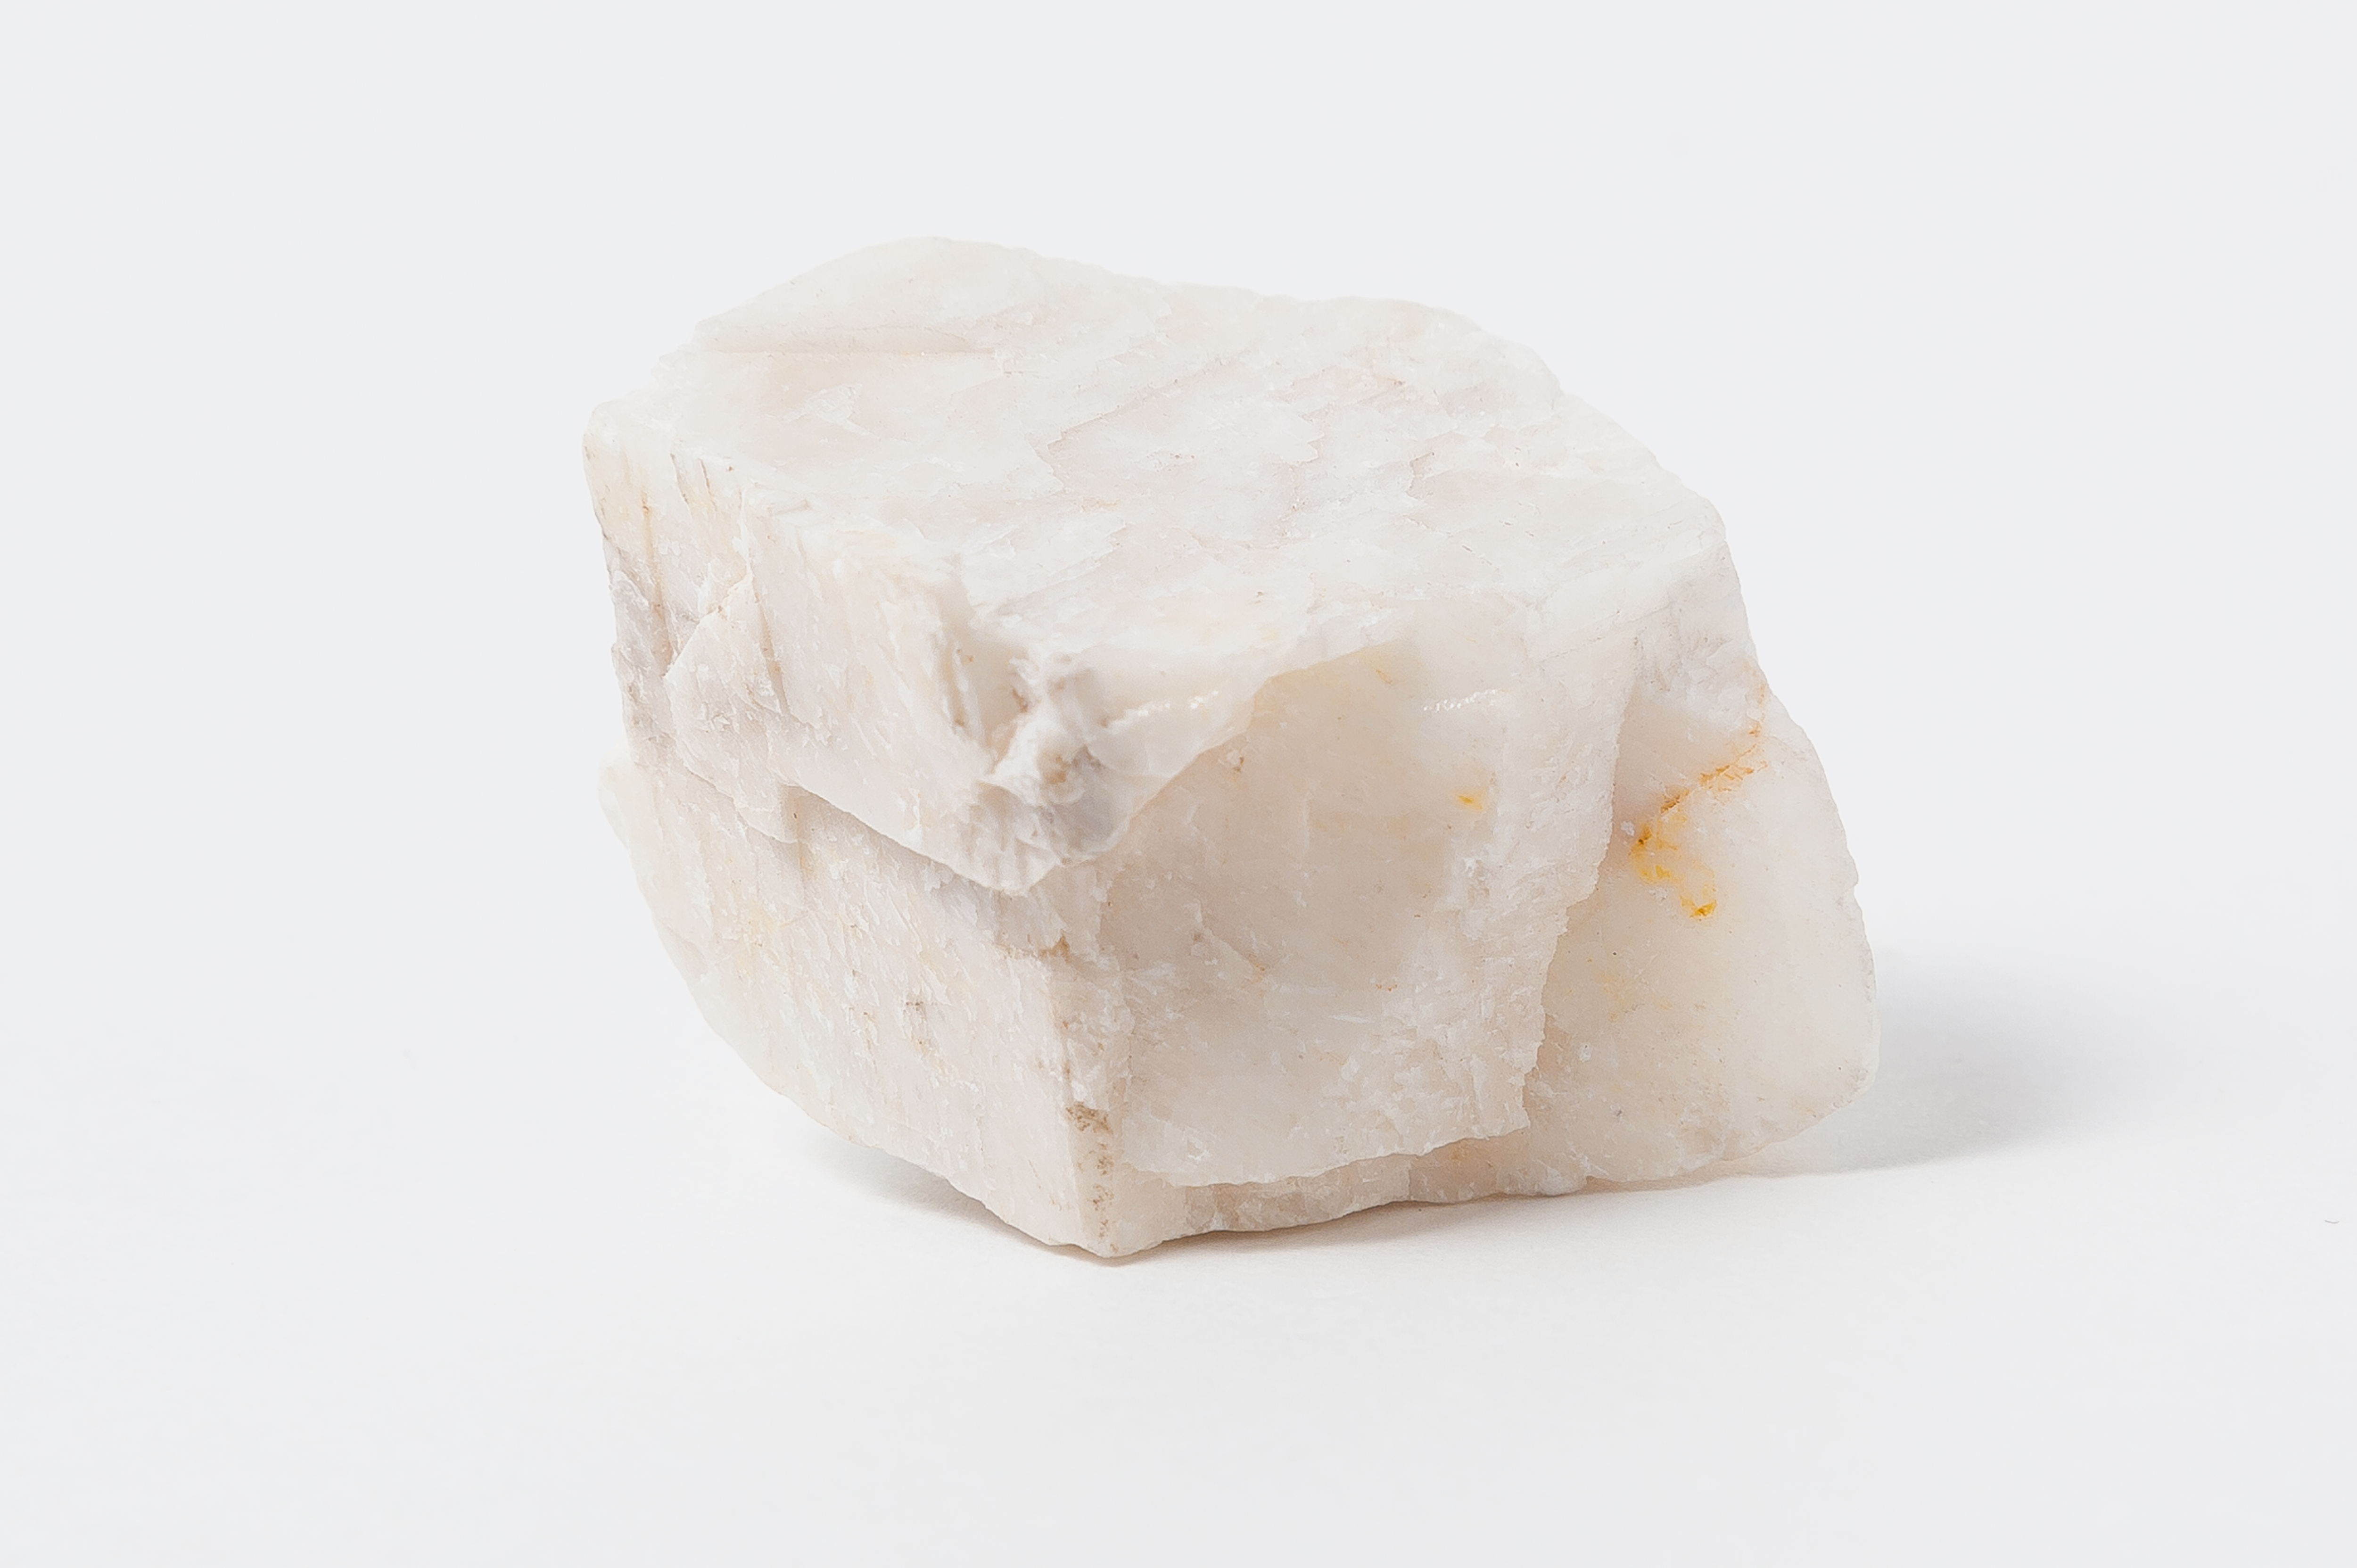 White calcite